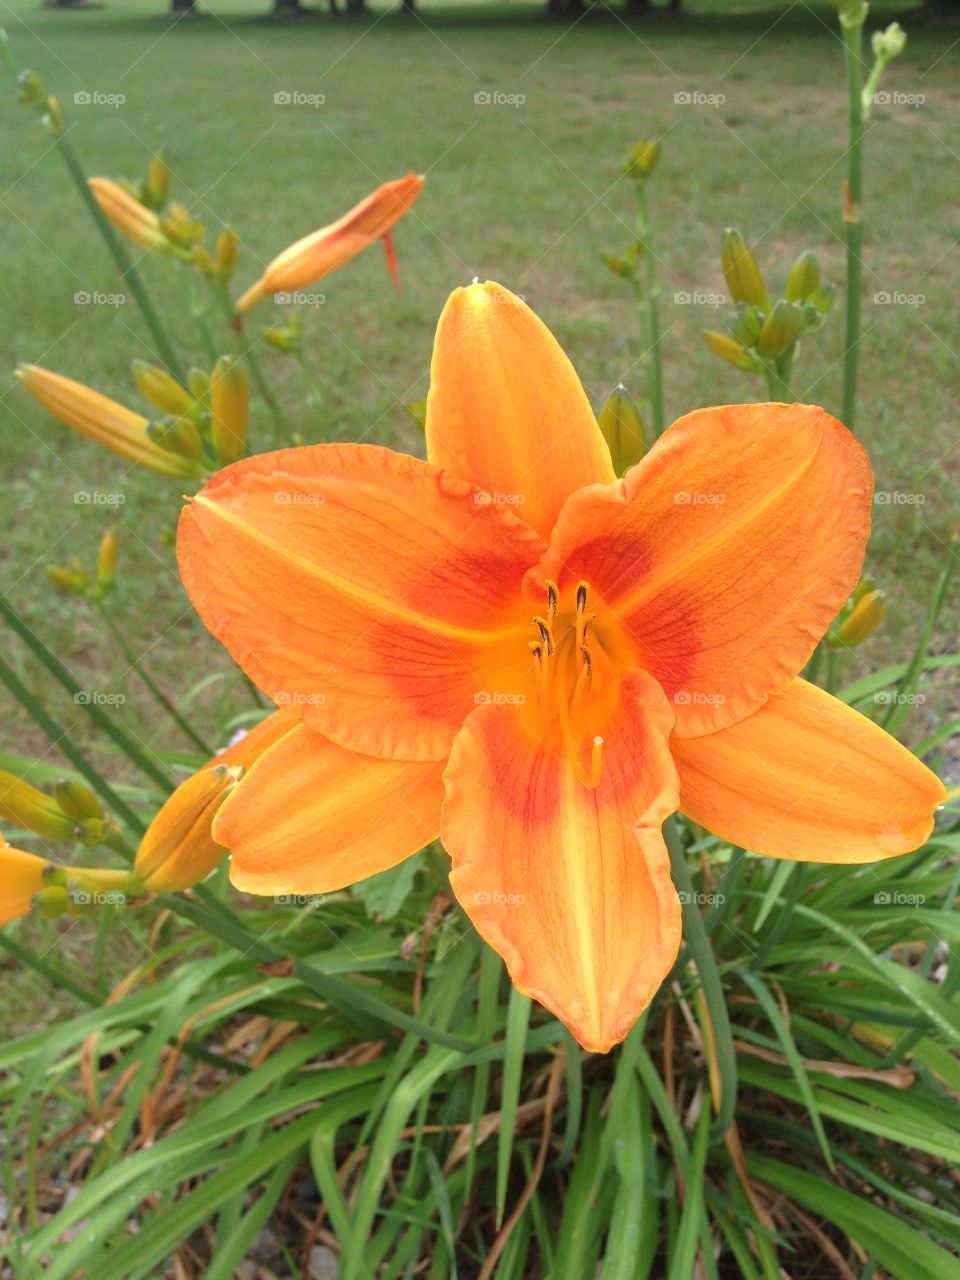 Orange glory. Orange flower growing in Michigan 